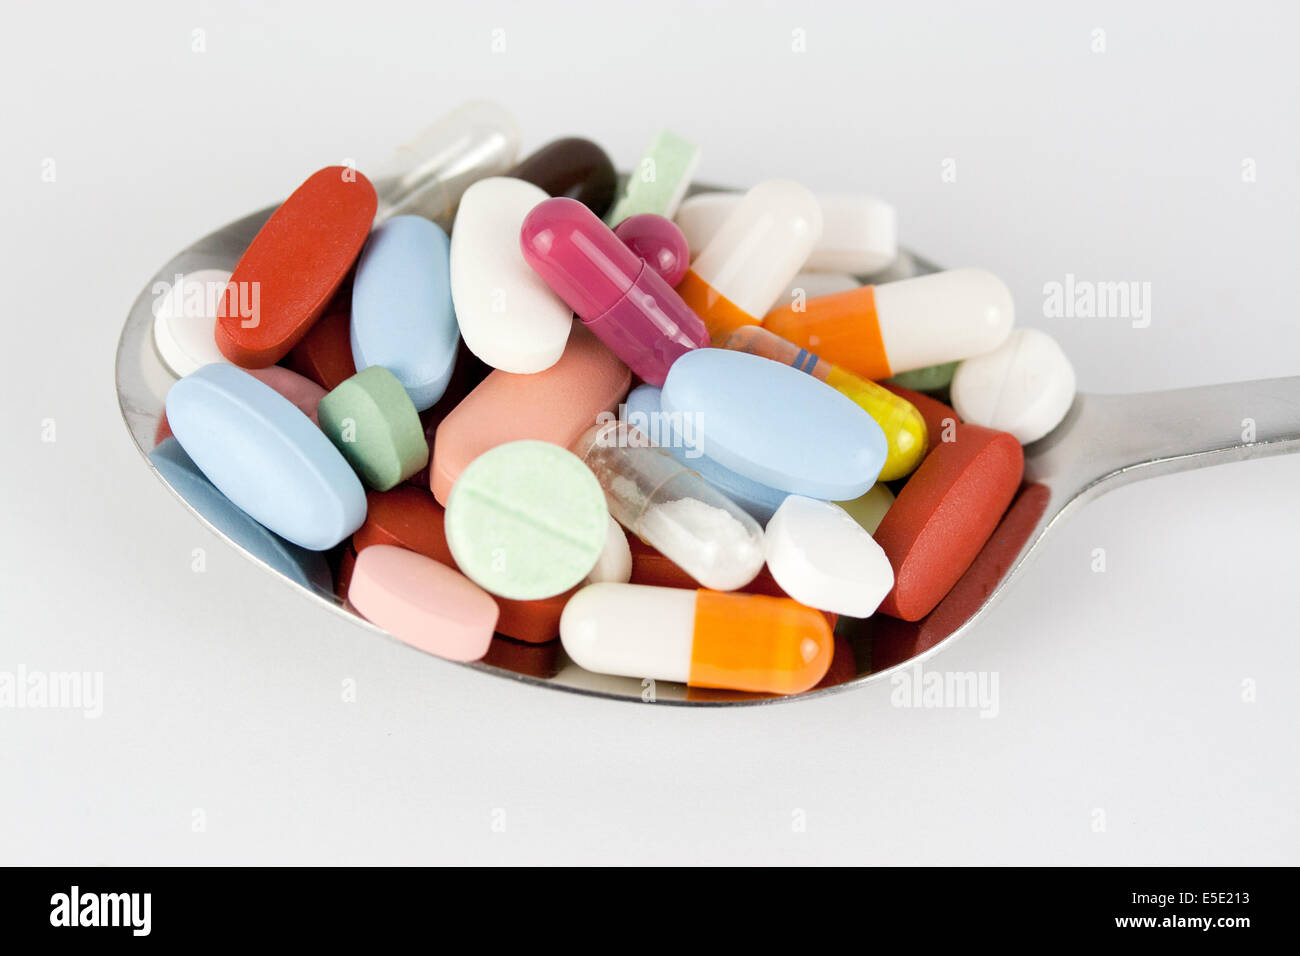 tabletten medikamente Loeffel pillen medikament pille tablette apotheke gesundheit medizin medizinisch pharma pharmazie pharmaze Stock Photo